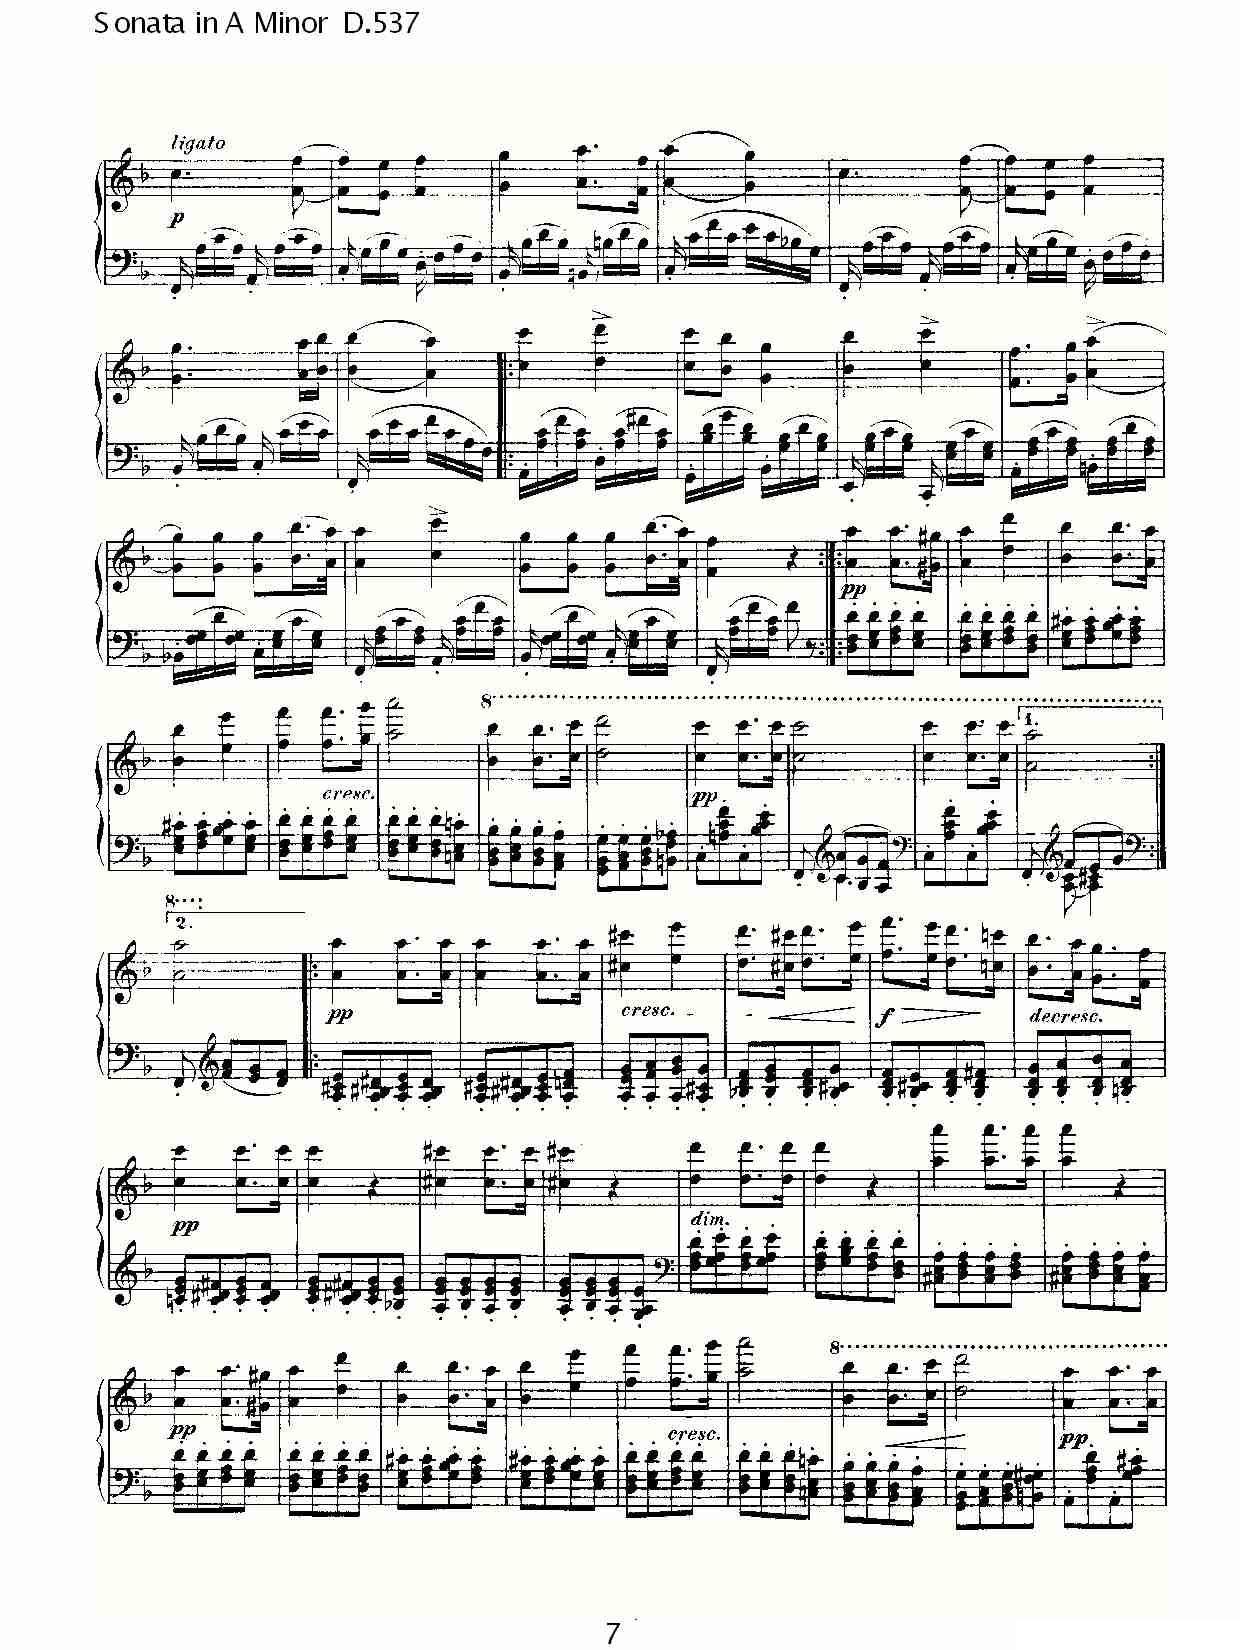 Sonata in A Minor D.537（A小调奏鸣曲 D.537）钢琴曲谱（图7）